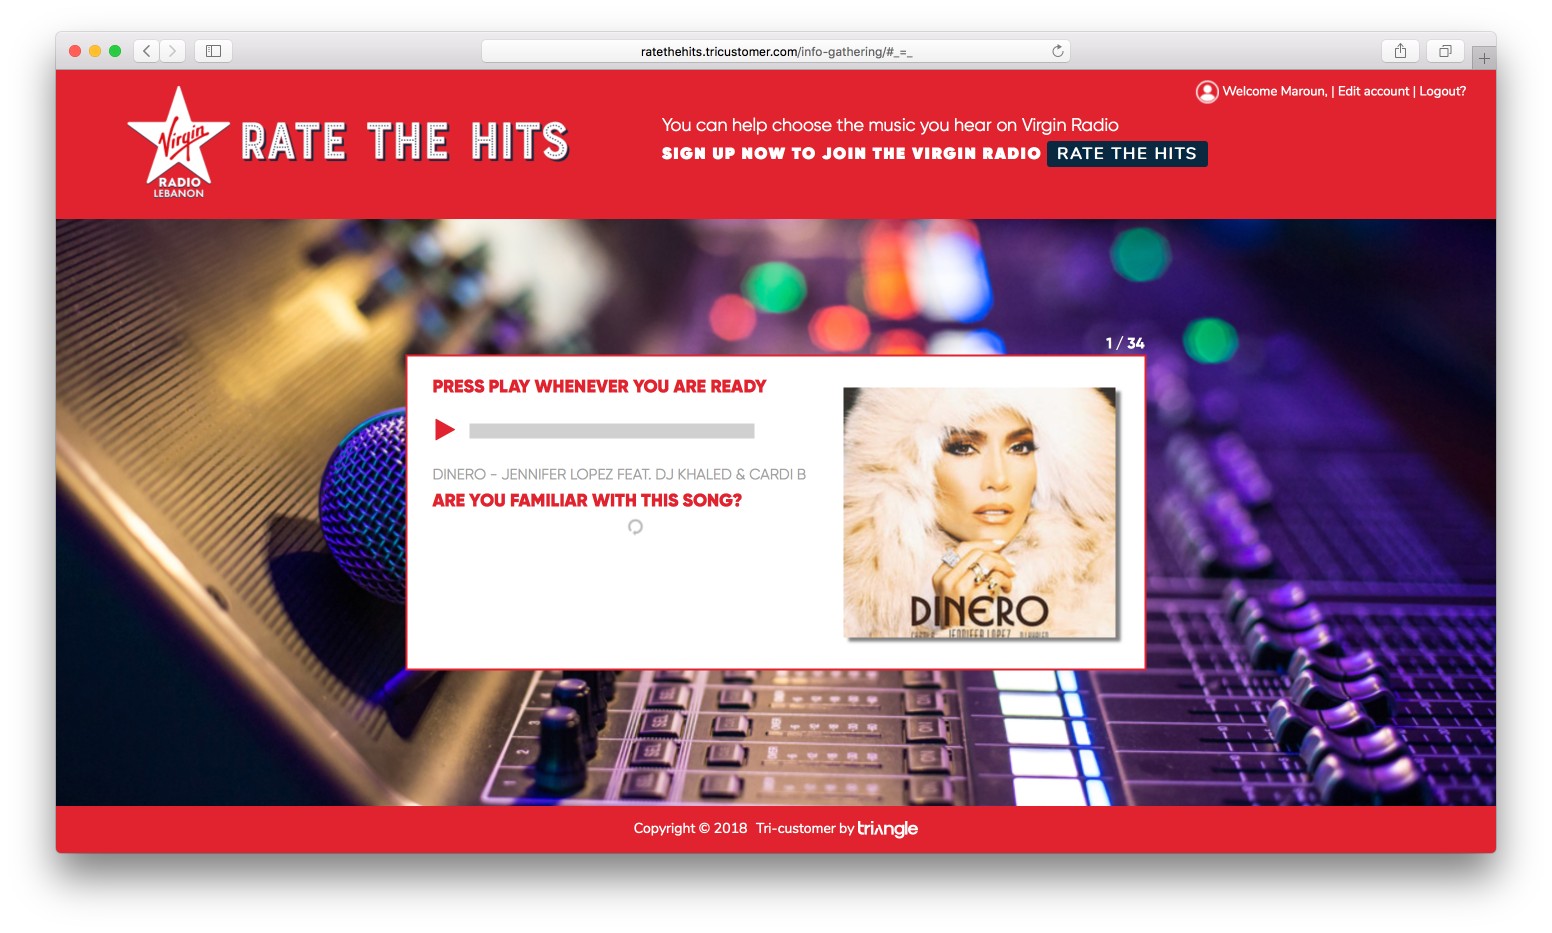 Rate the hits - Virgin Radio Lebanon